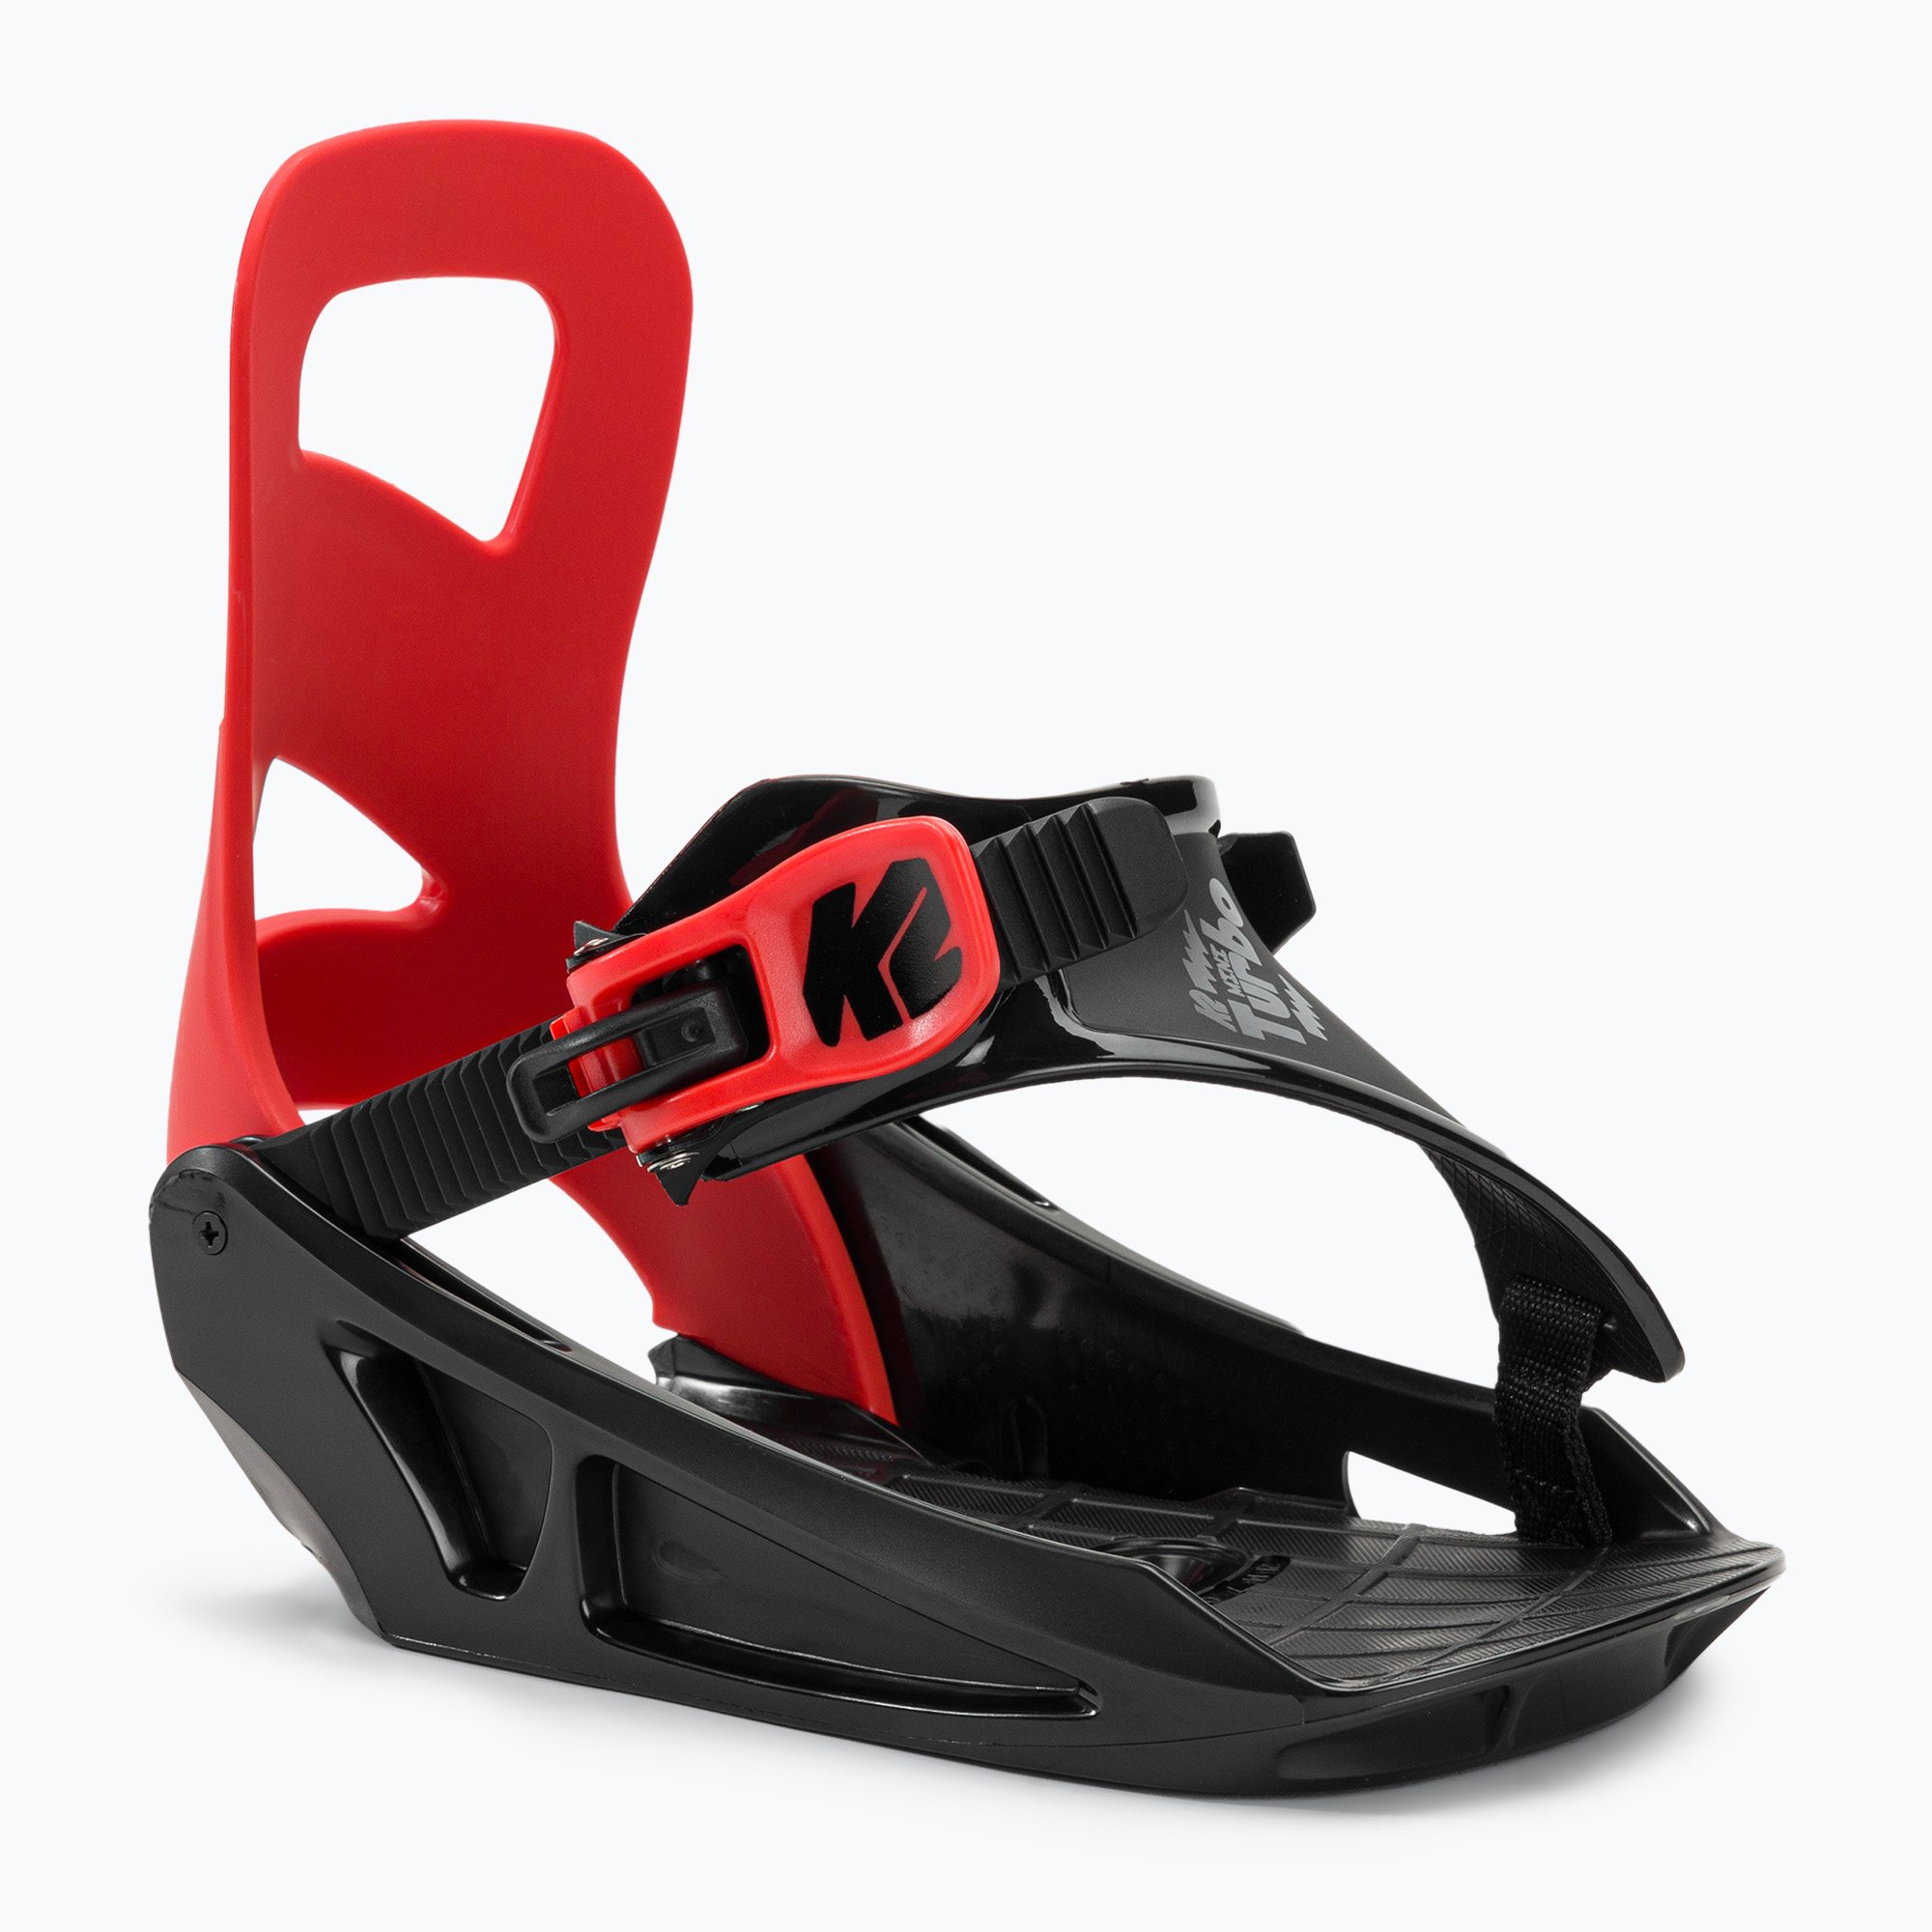 Fixare snowboard pentru copii K2 Mini Turbo roșu 11F1015/12